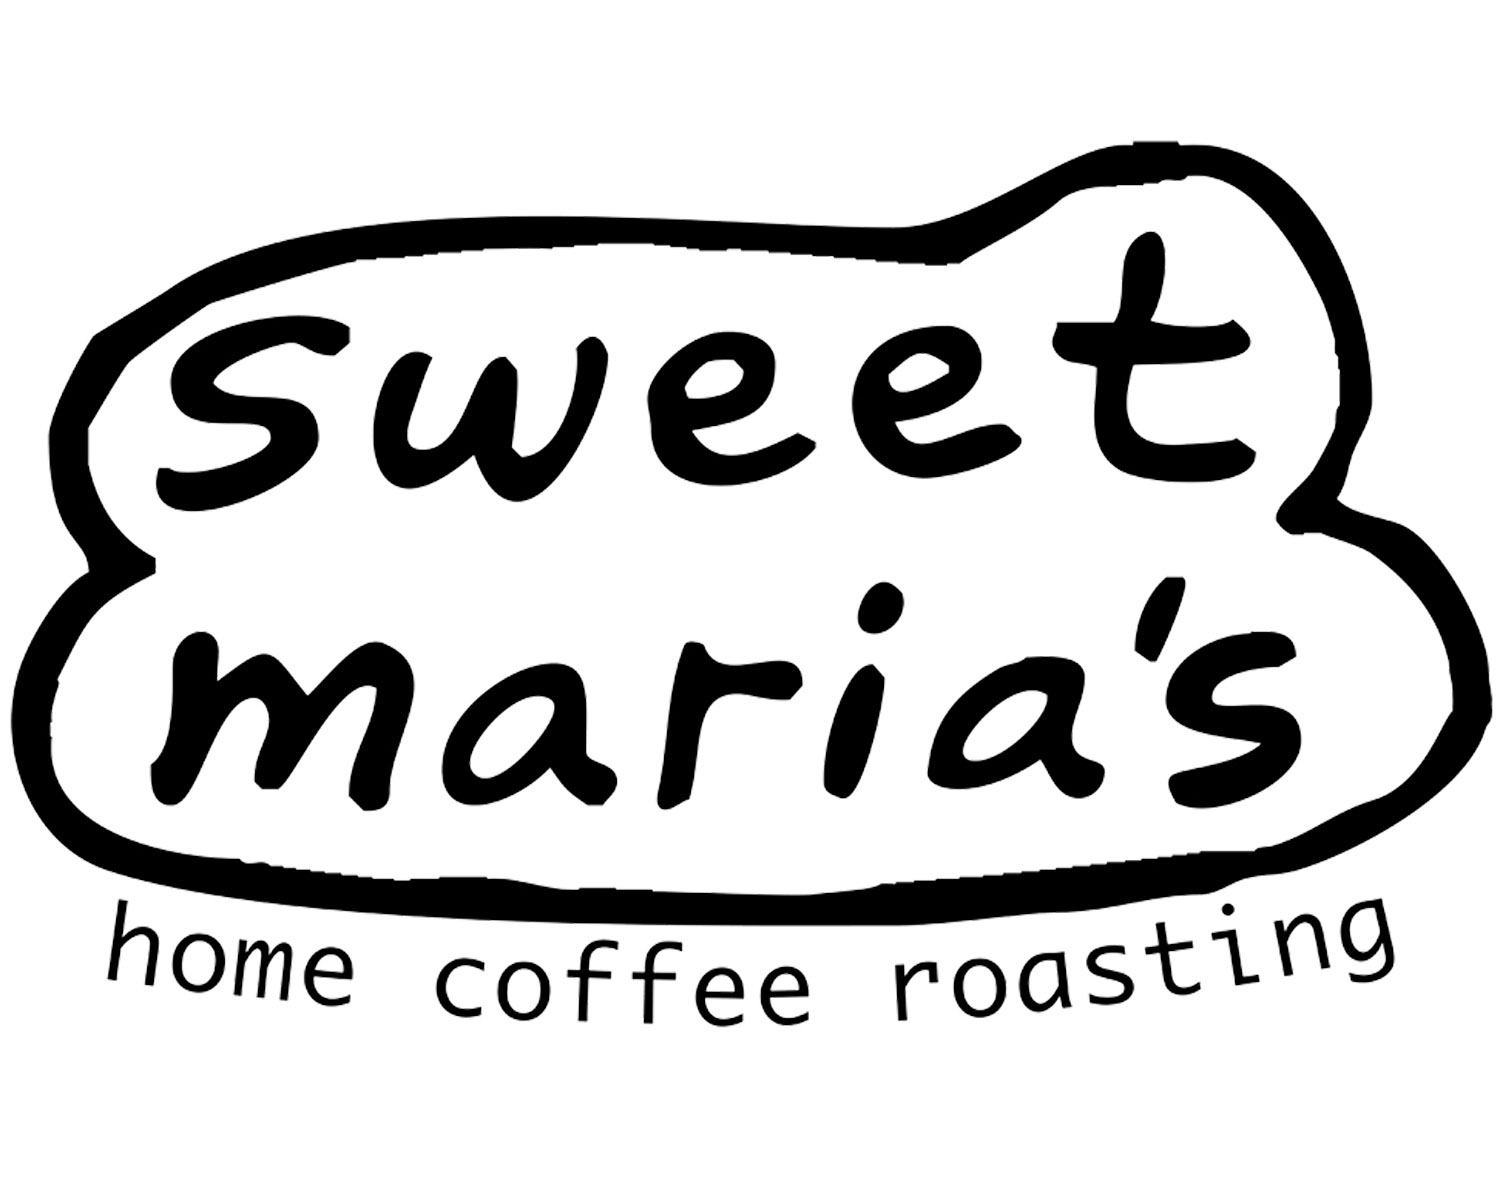 Home Coffee Roasting with Sweet Maria's